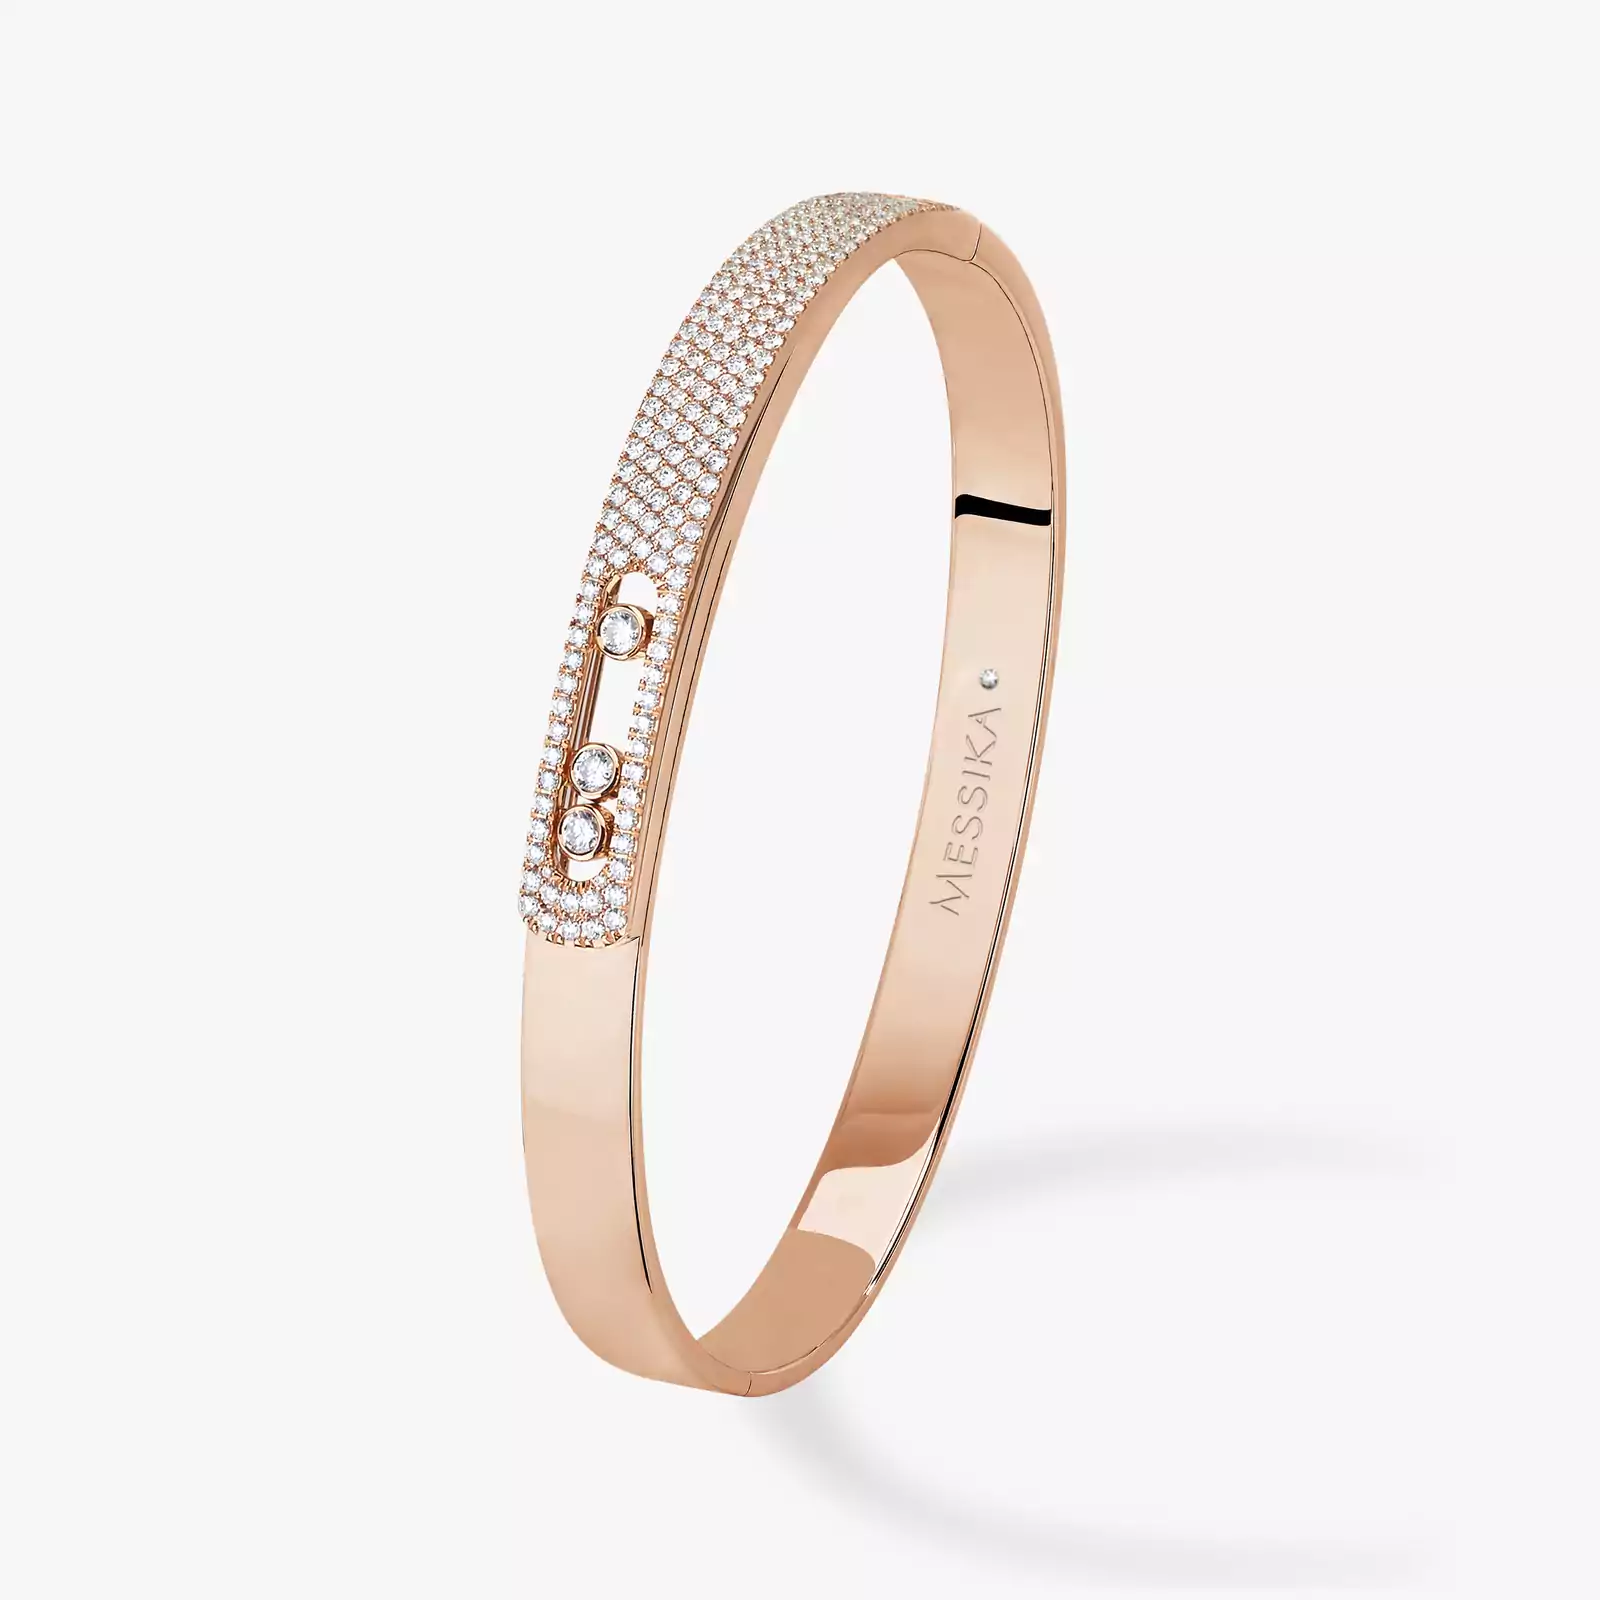 Bracelet For Her Pink Gold Diamond Move Noa Pavé Bangle  06371-PG